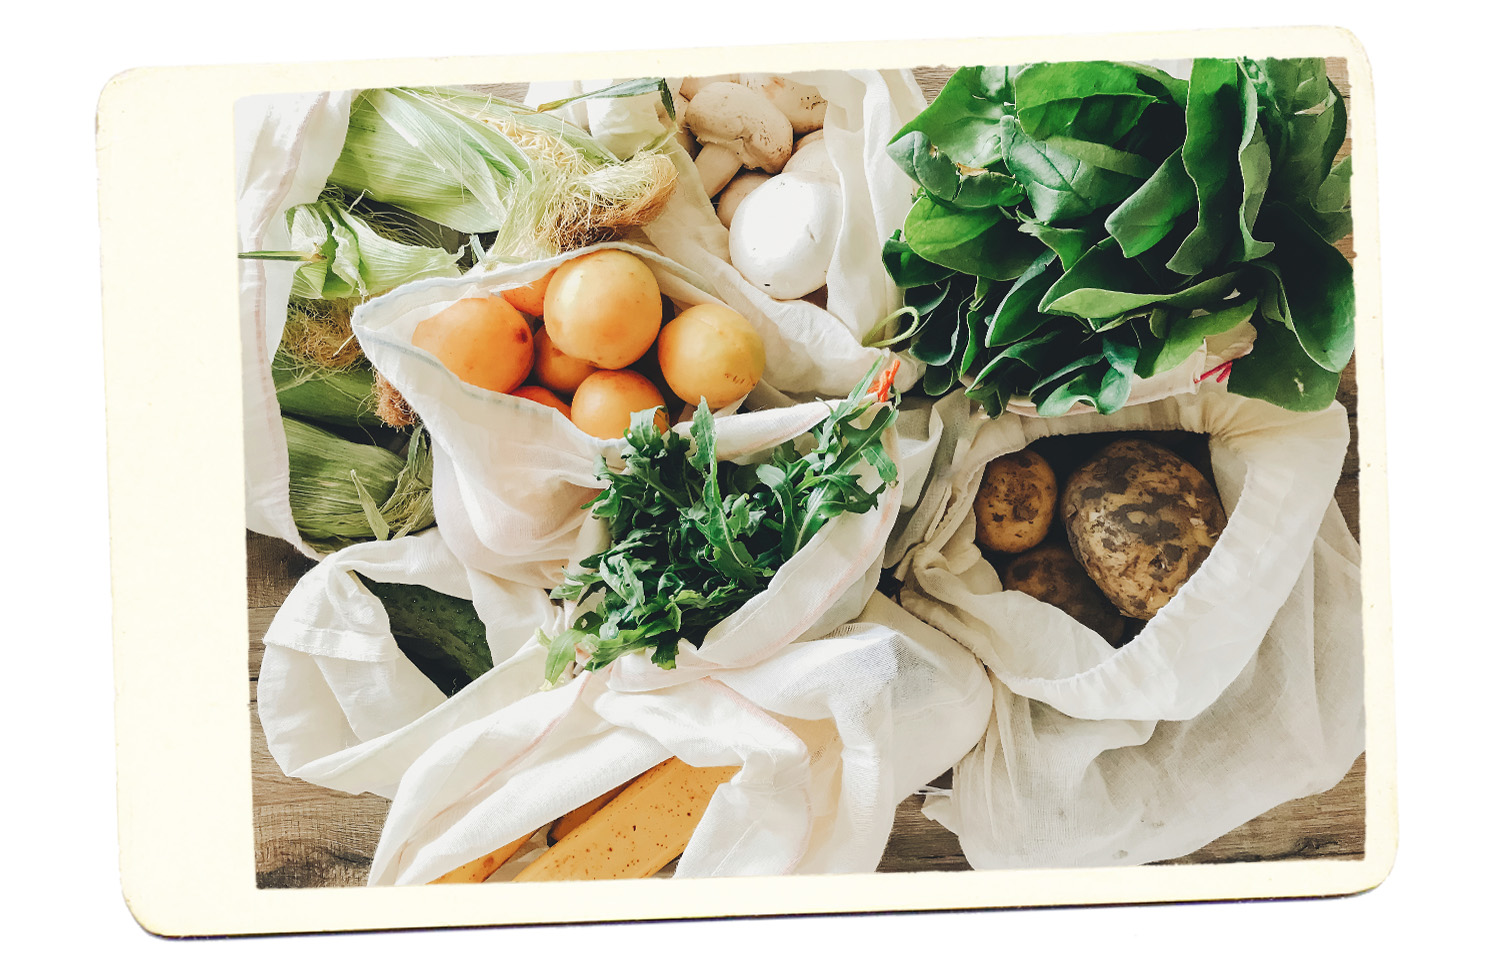 Farmers Market Fruit Vegetables Eco-Friendly Mesh Bags no plastic